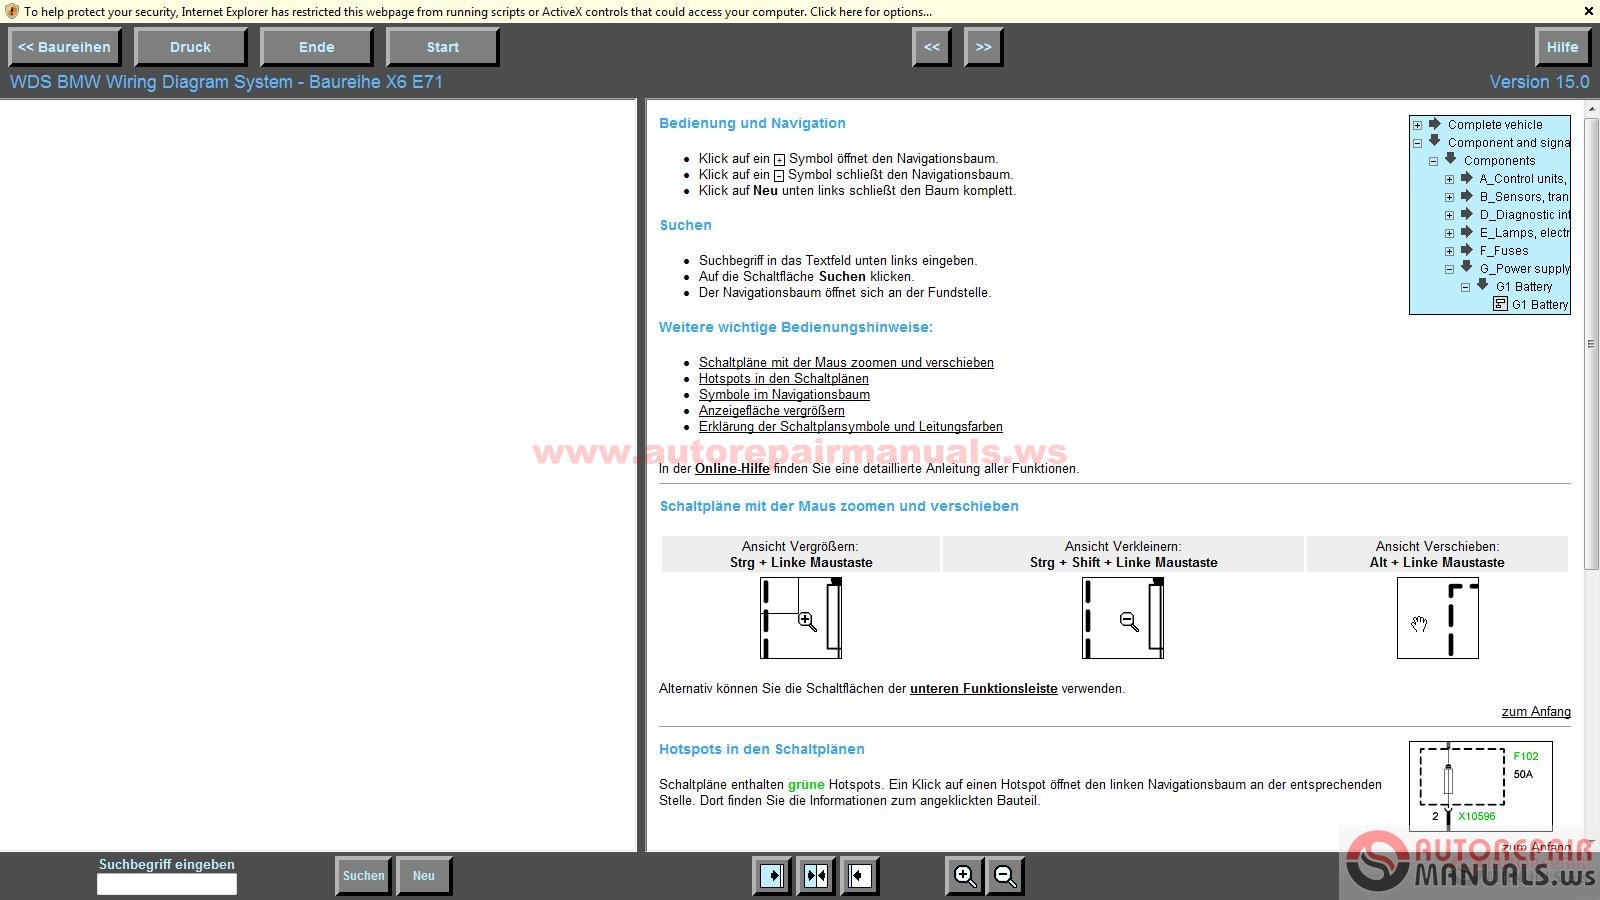 Wds bmw wiring diagram system free download #3